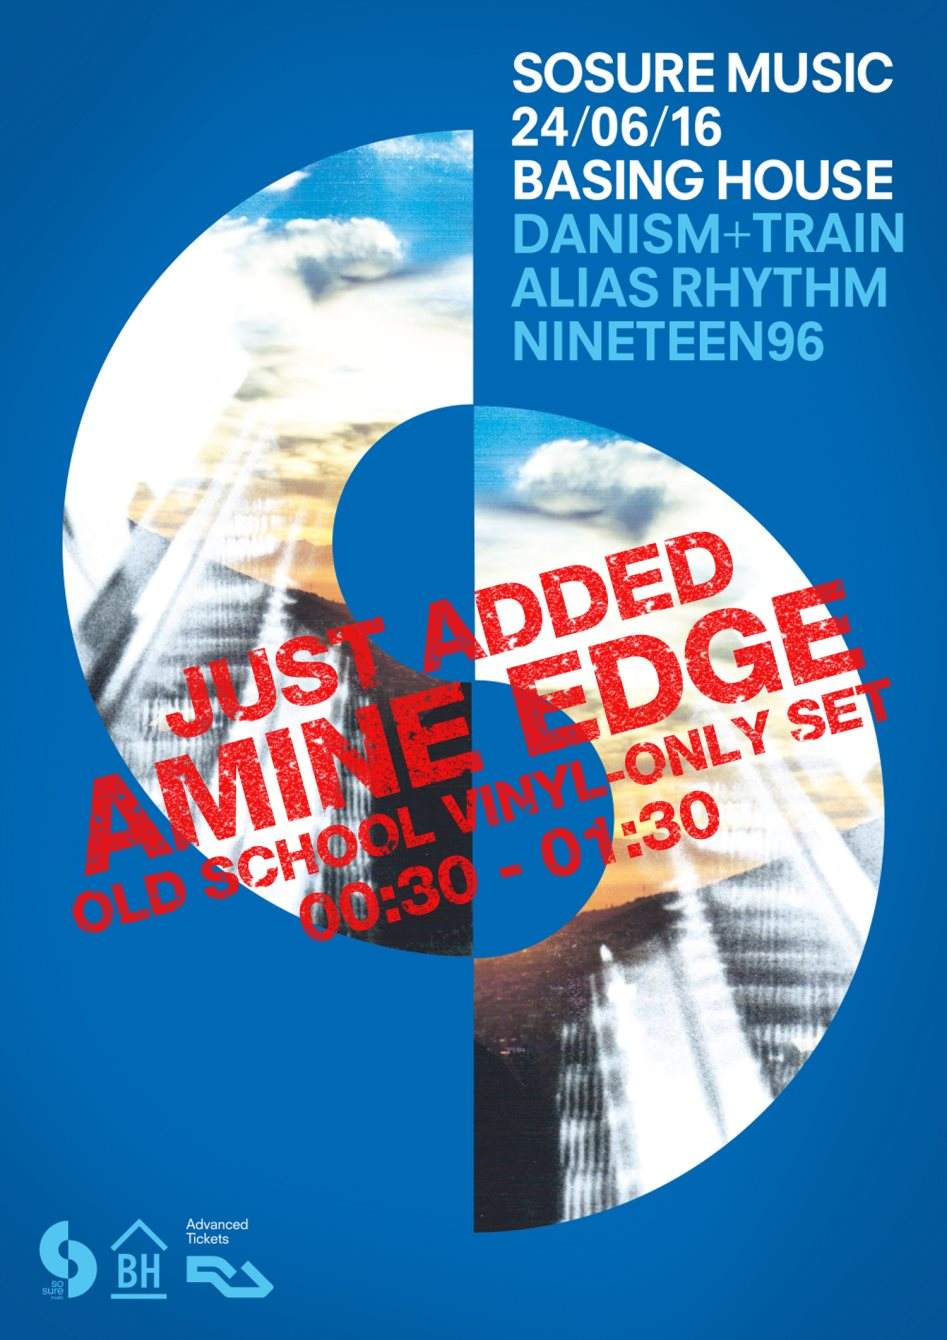 Sosure Music with Amine Edge (Vinyl Only Set), Danism + Train, Alias Rhytm + Nineteen96 - Página frontal